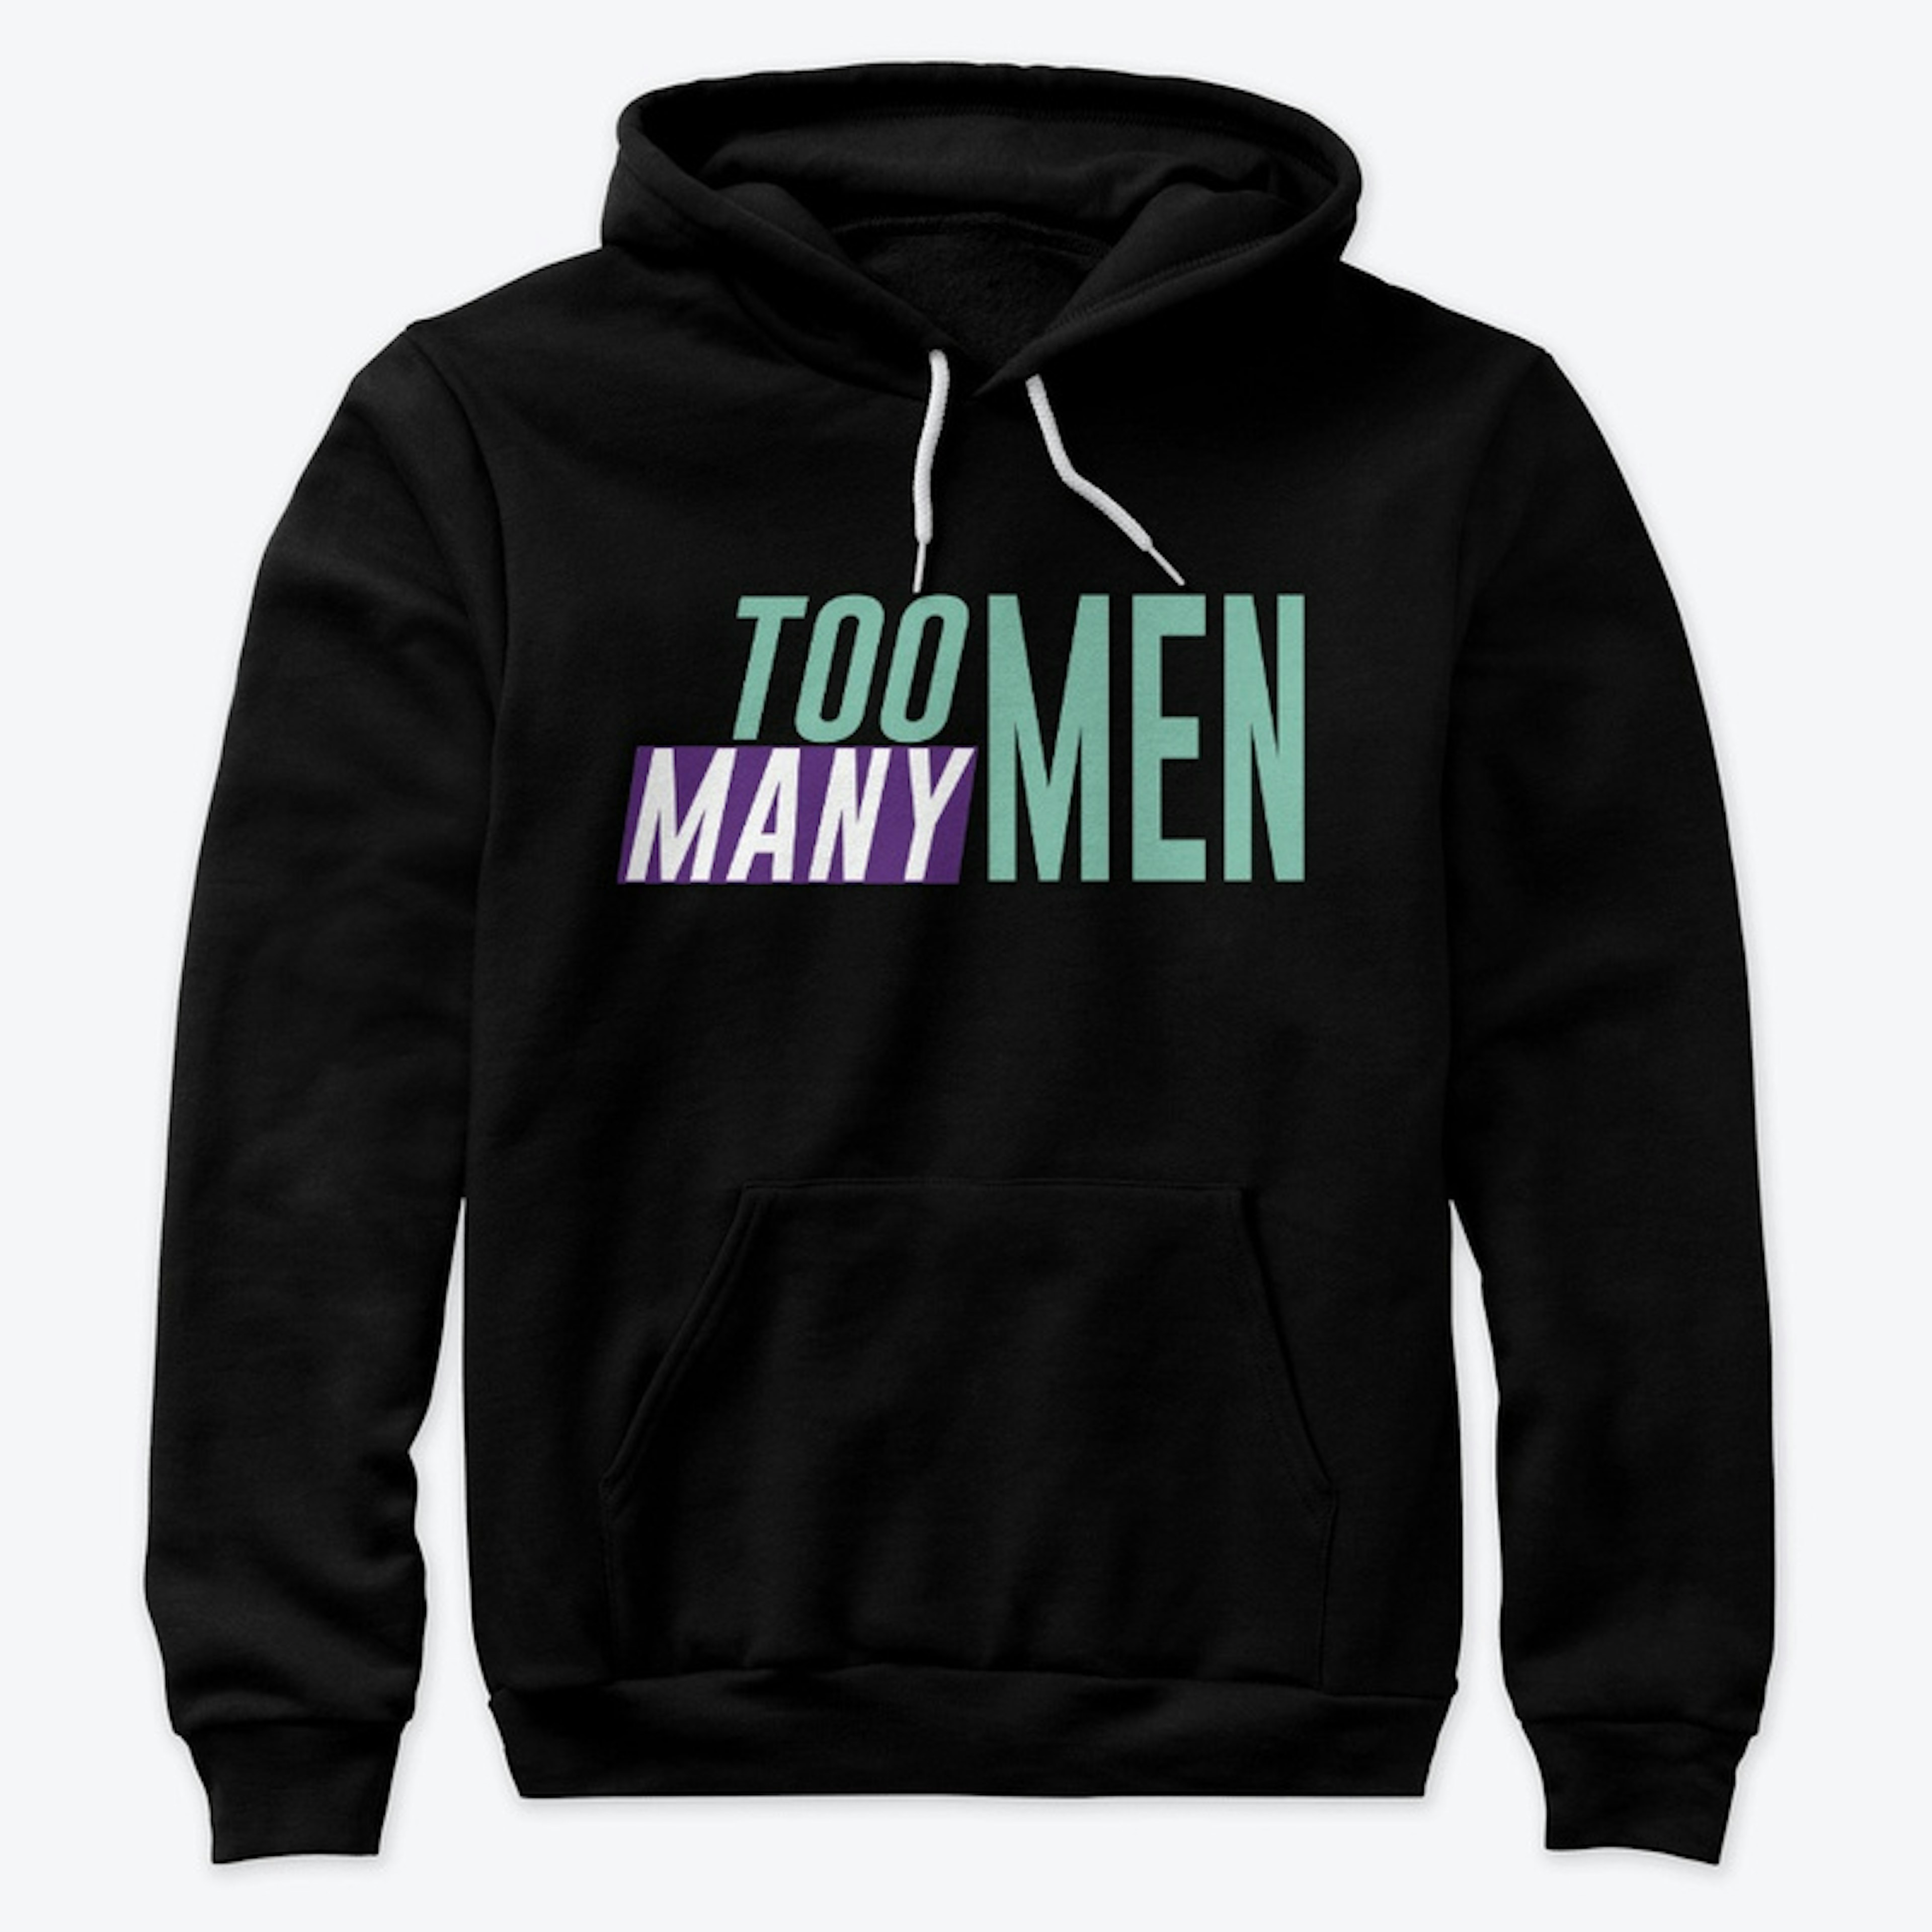 Too Many Men sweatshirt